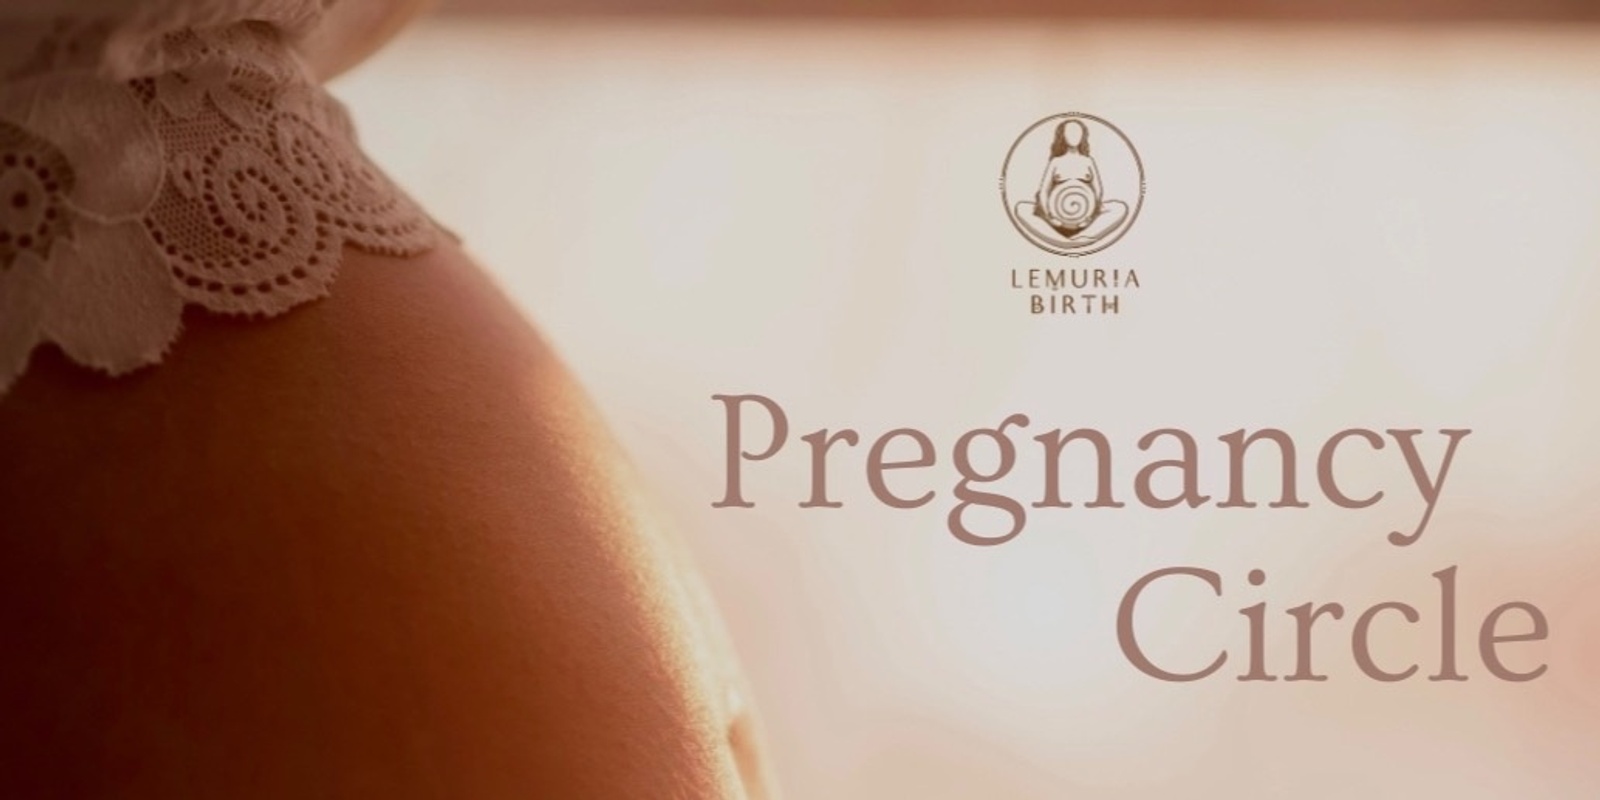 Banner image for Pregnancy Circle | Lemuria Birth